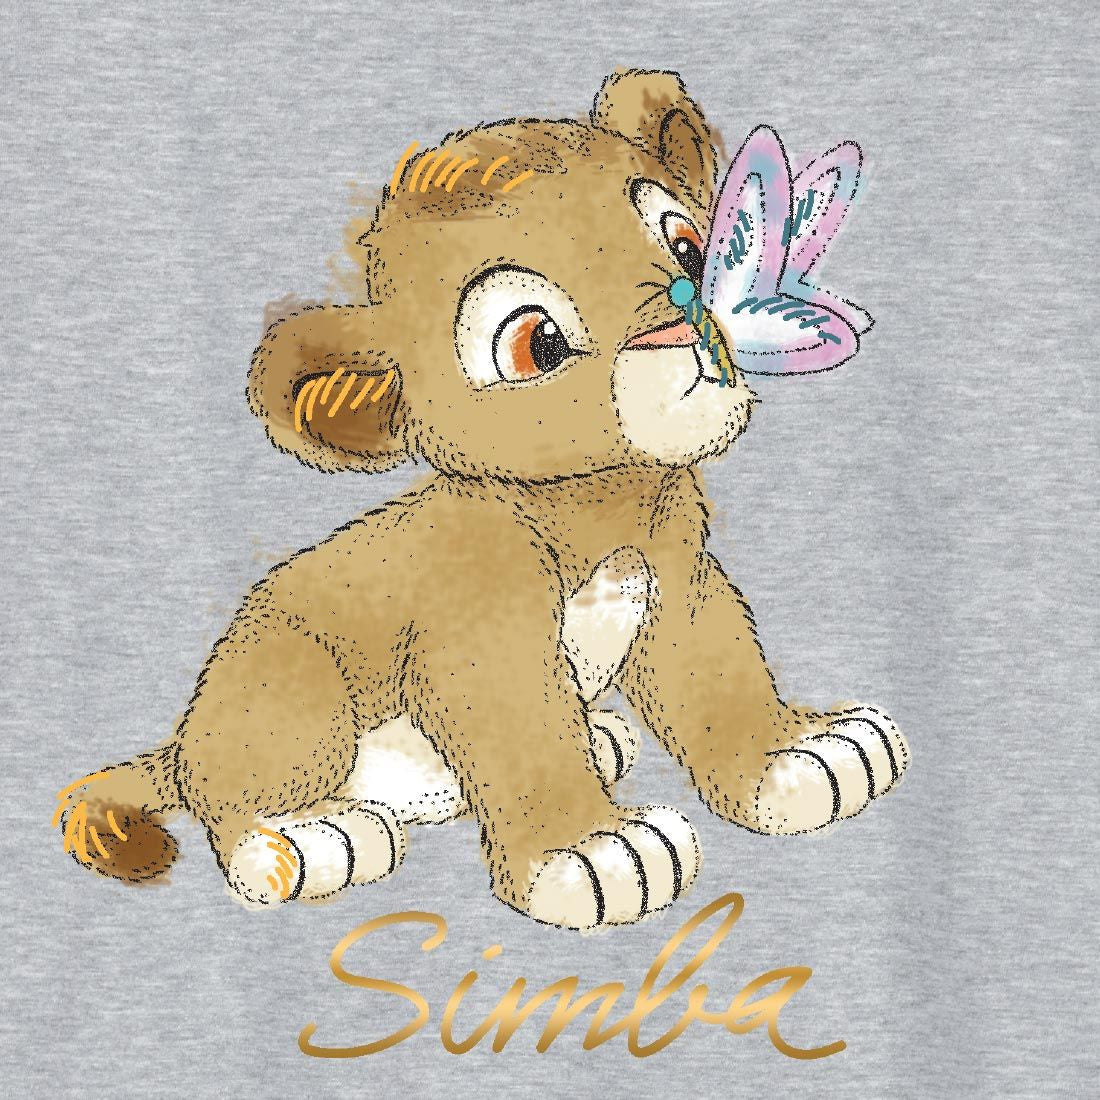 Disney Women's T-shirt - The Lion King - Simba